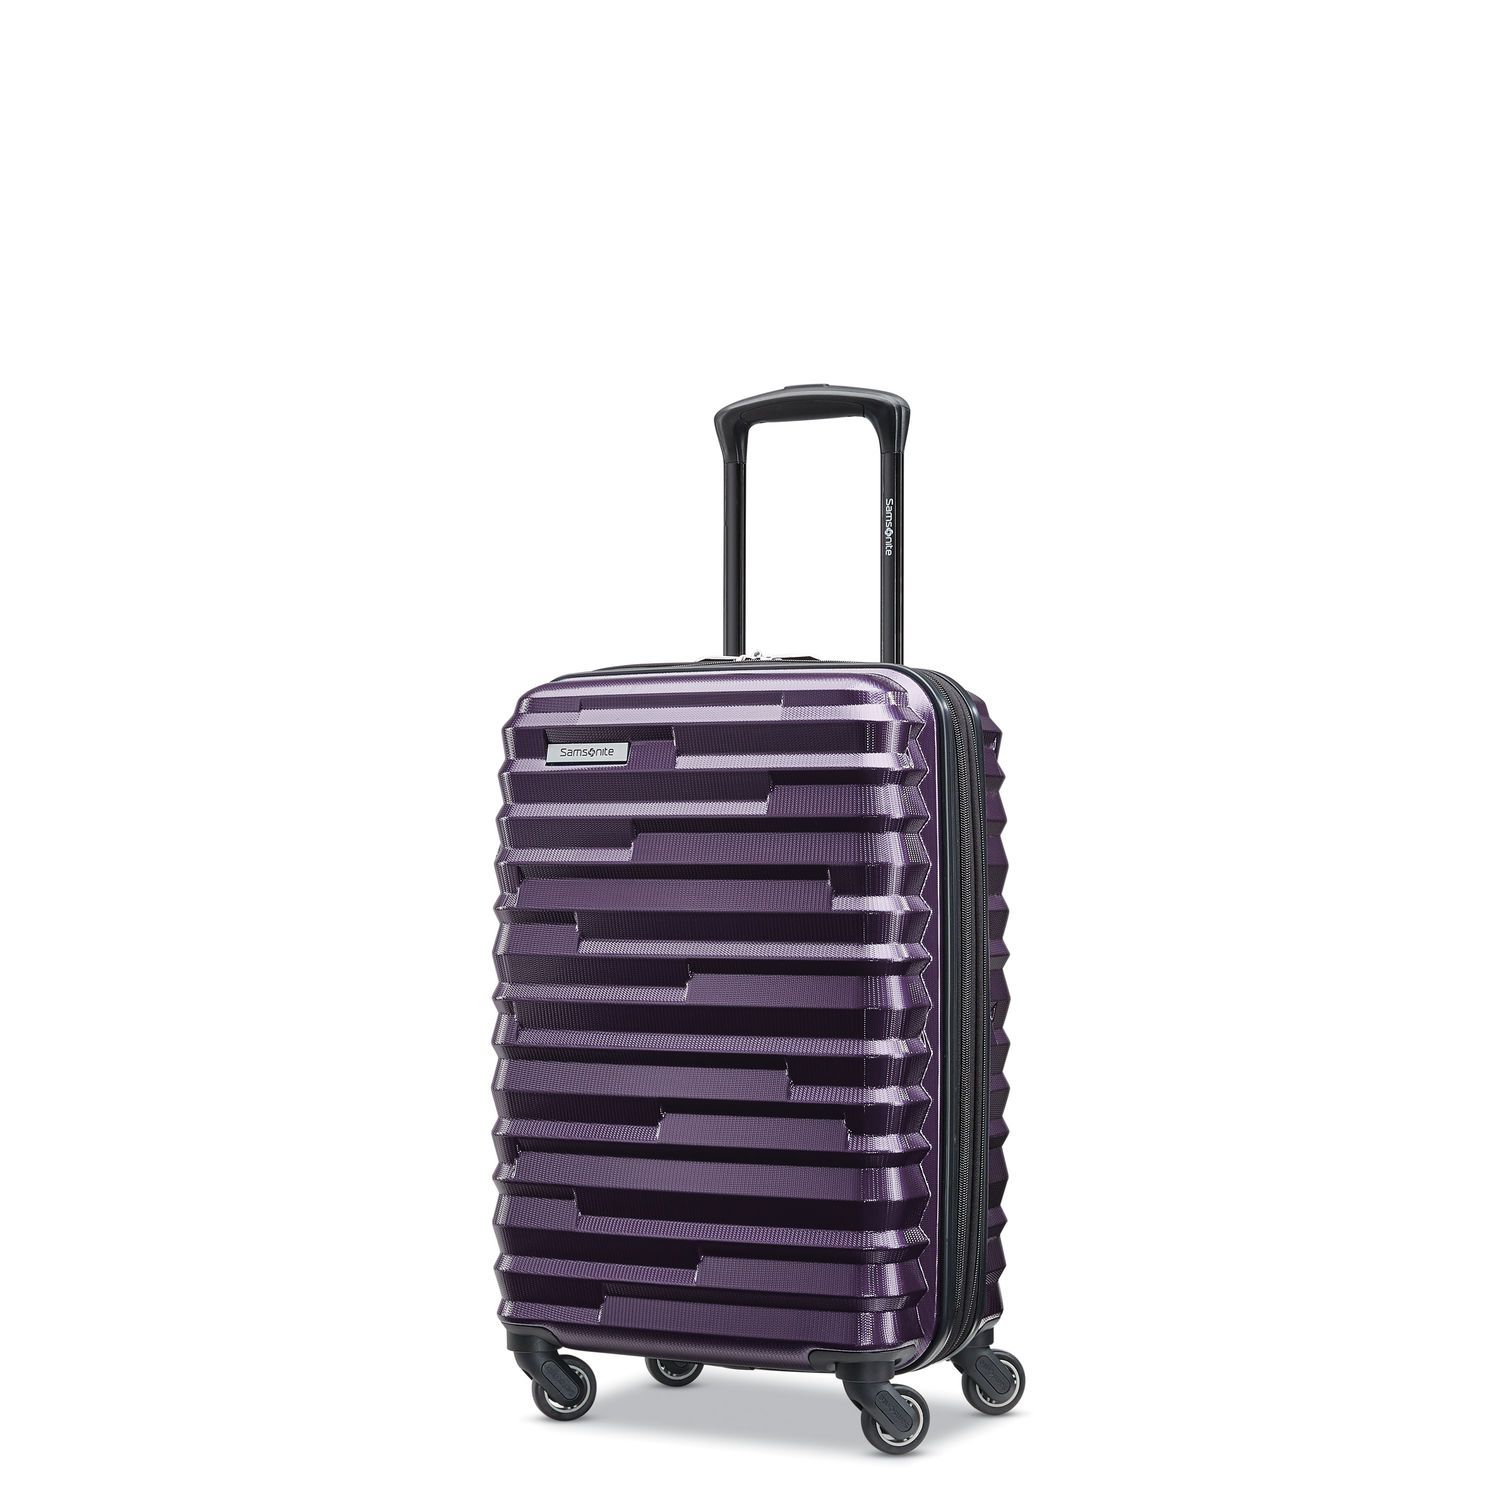 Samsonite Ziplite 4.0 Spinner Carry-On Expandable Luggage - Purple